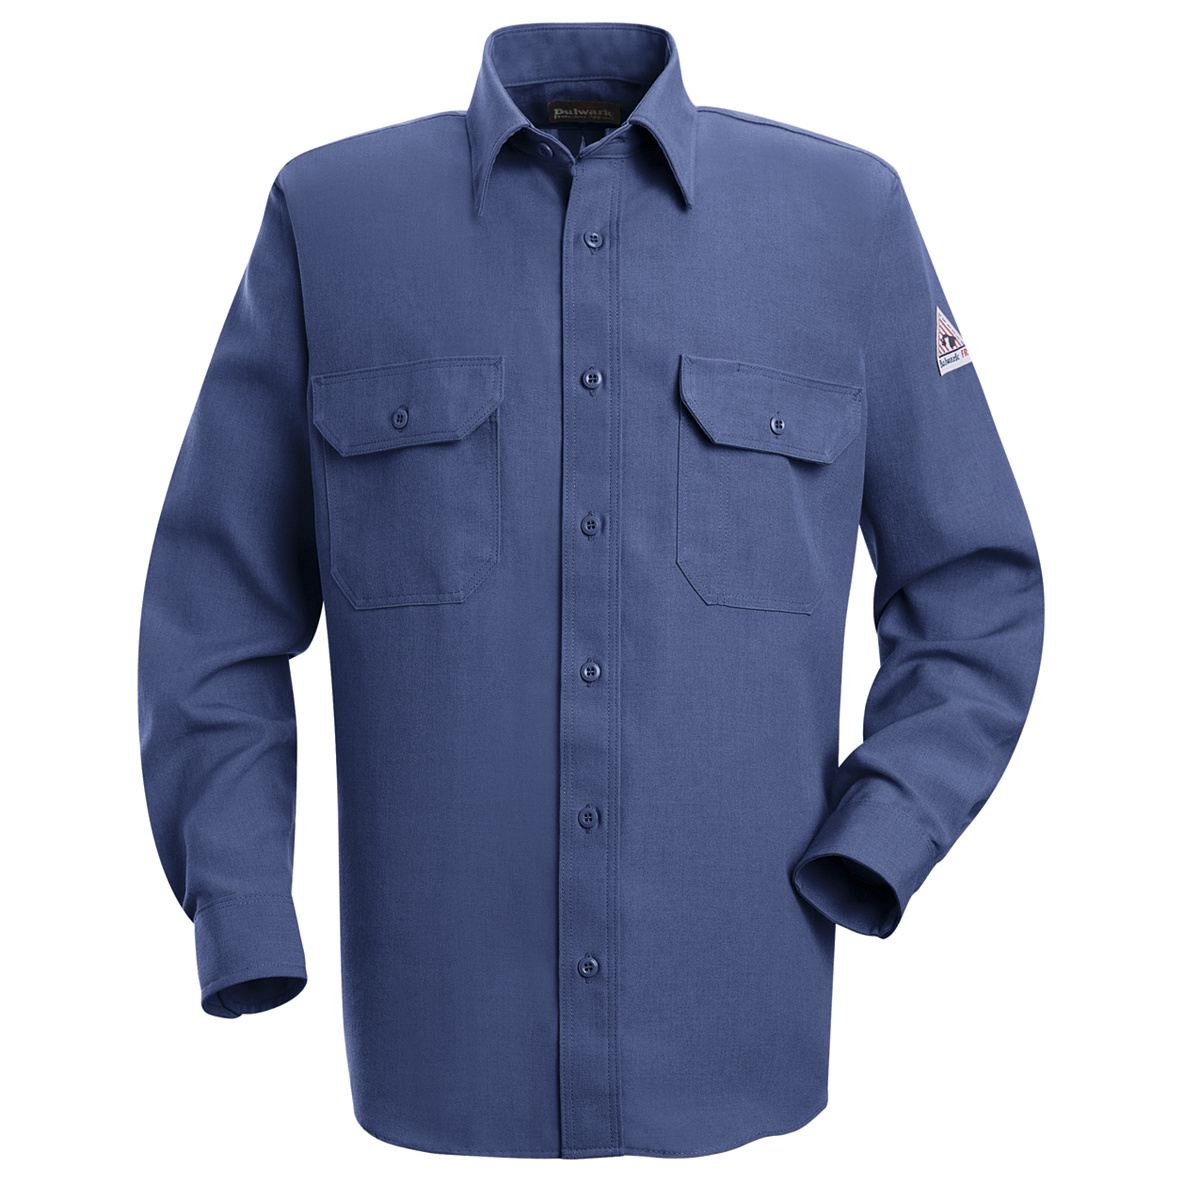 Bulwark® Large Tall Gulf Blue Nomex® IIIA/Nomex® Aramid/Kevlar® Aramid Flame Resistant Uniform Shirt With Button Front Closure